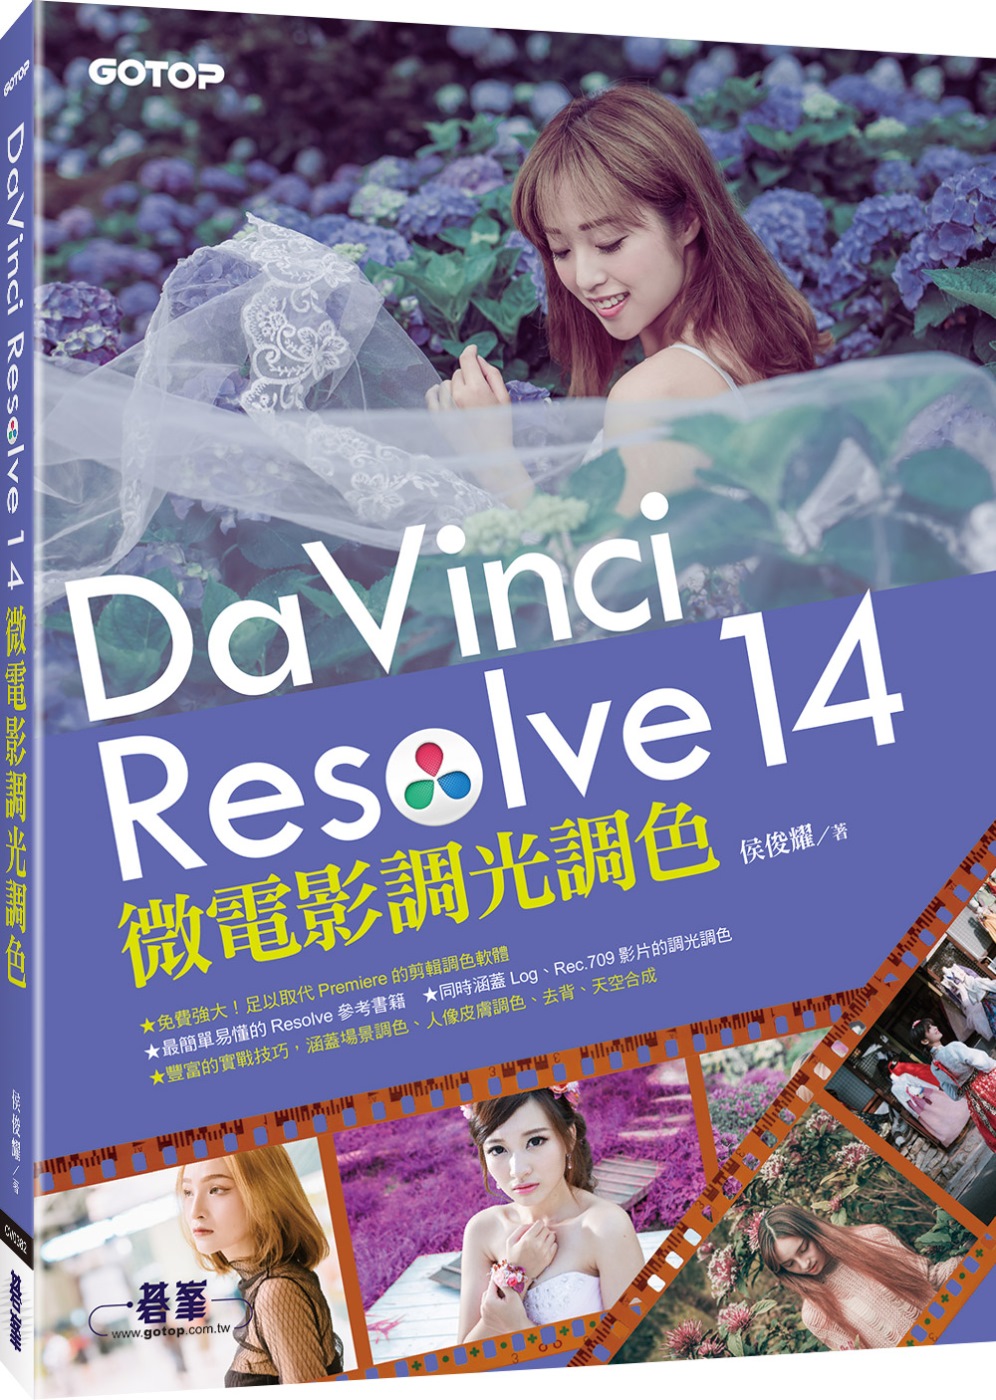 DaVinci Resolve 14 微電影調光調色